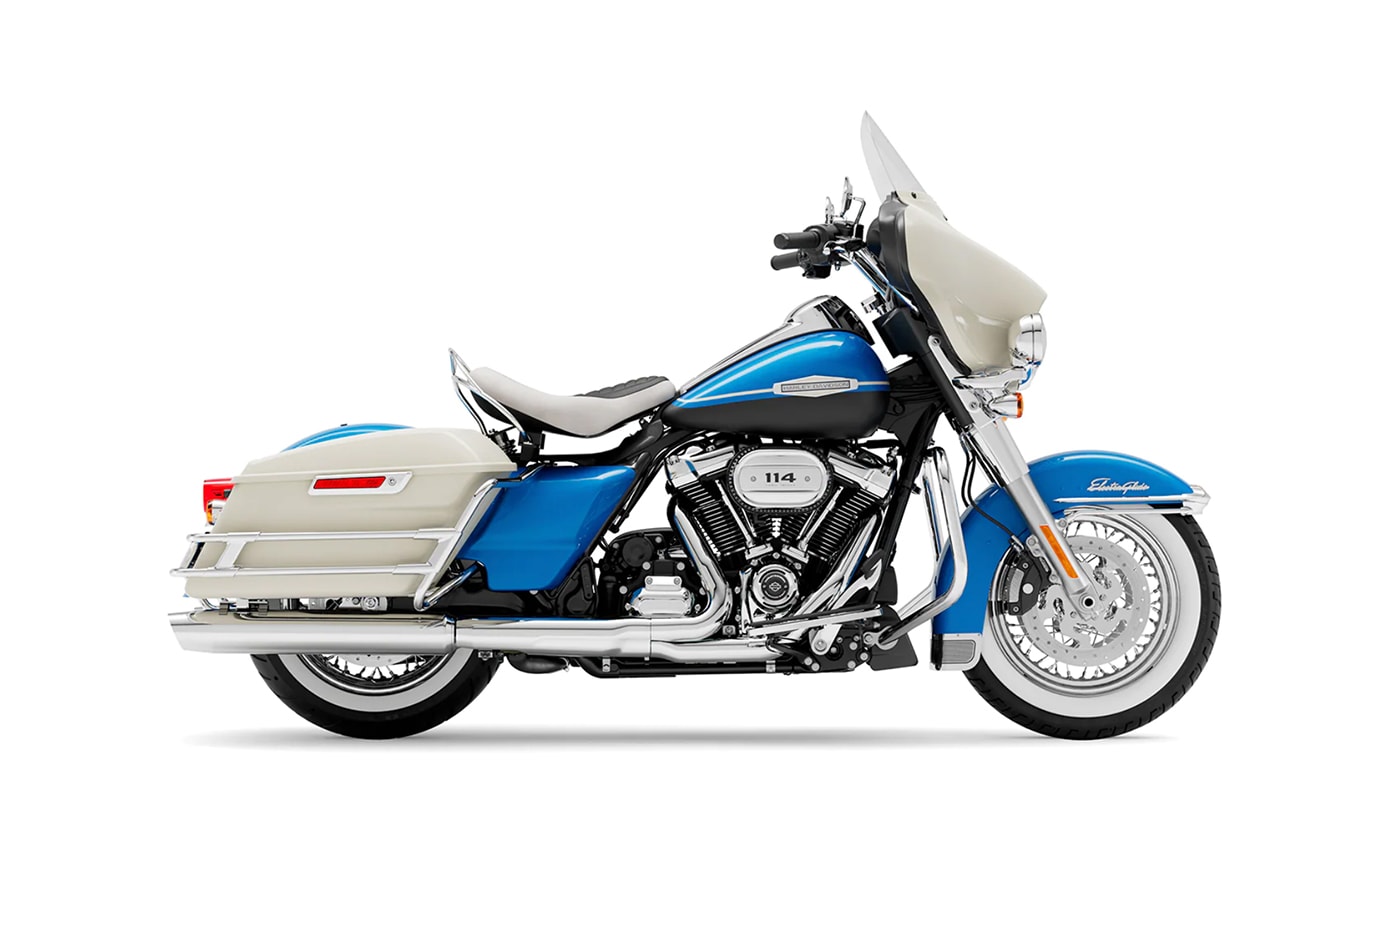 Harley Davidson 2021 Electra Glide Revival classic bikes tour bikes motorcycles american bikes HD icons 